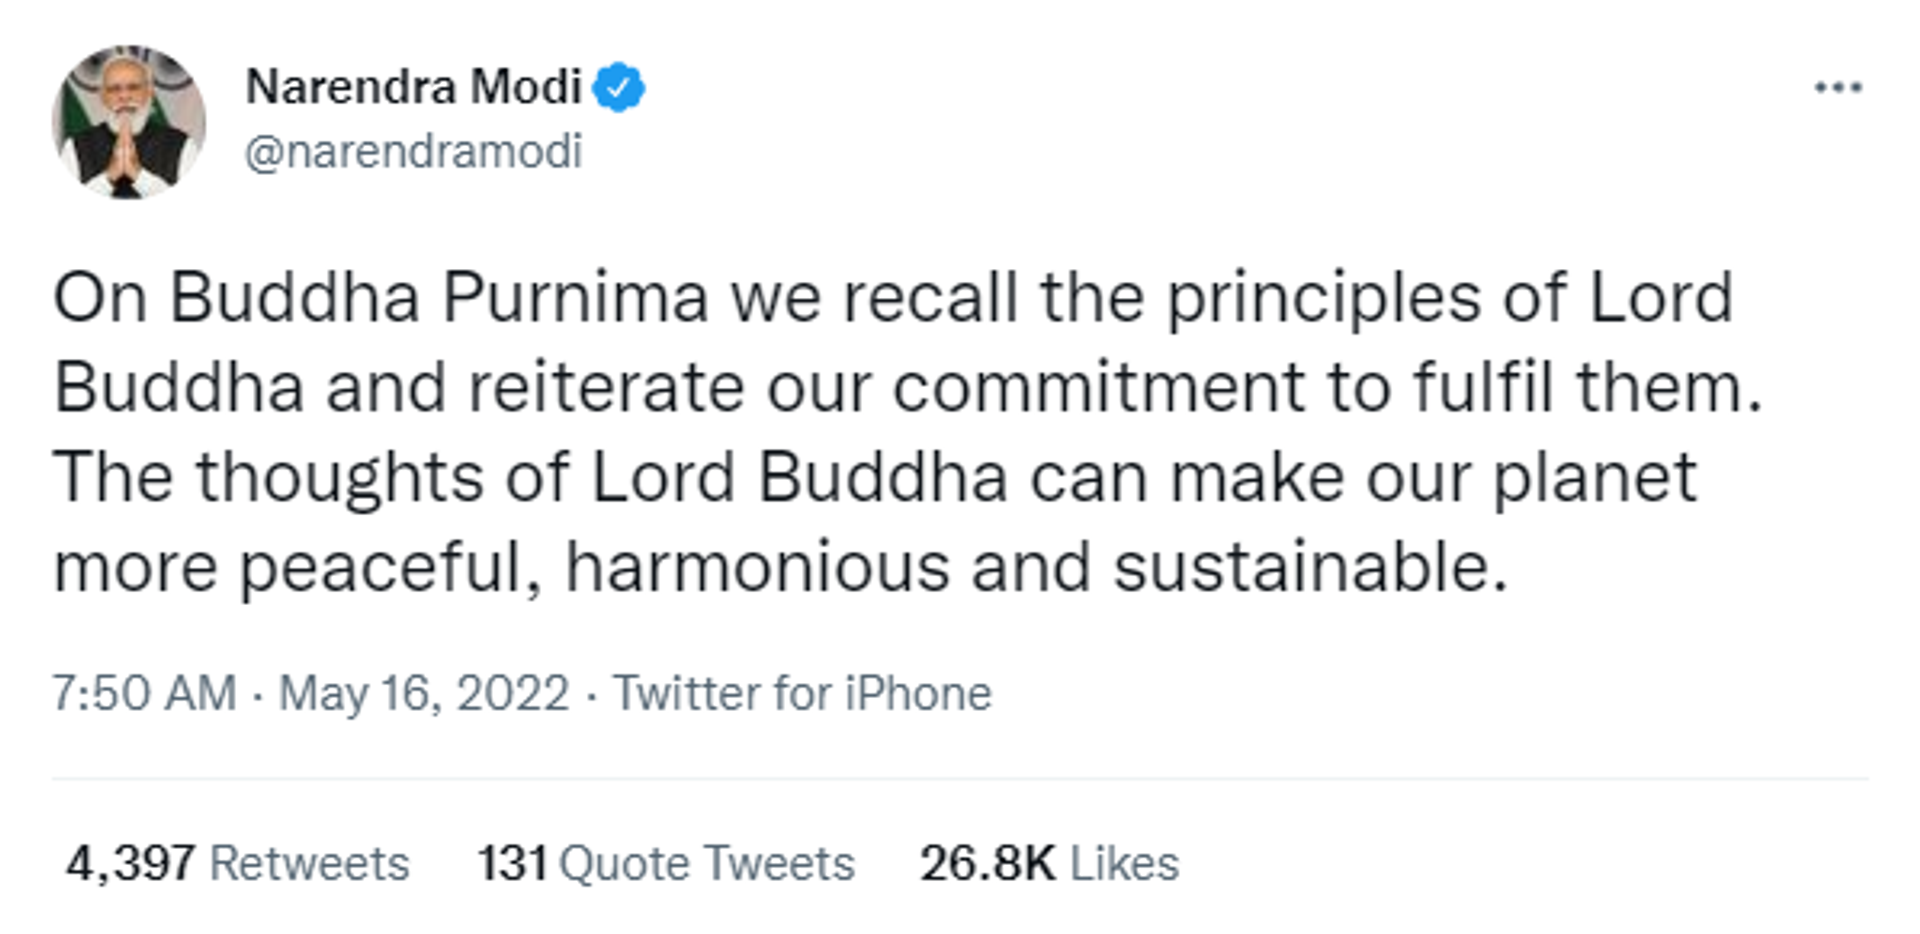 Prime Minister Narendra Modi Greets the Nation on the Occasion of Buddha Purnima - Sputnik International, 1920, 16.05.2022